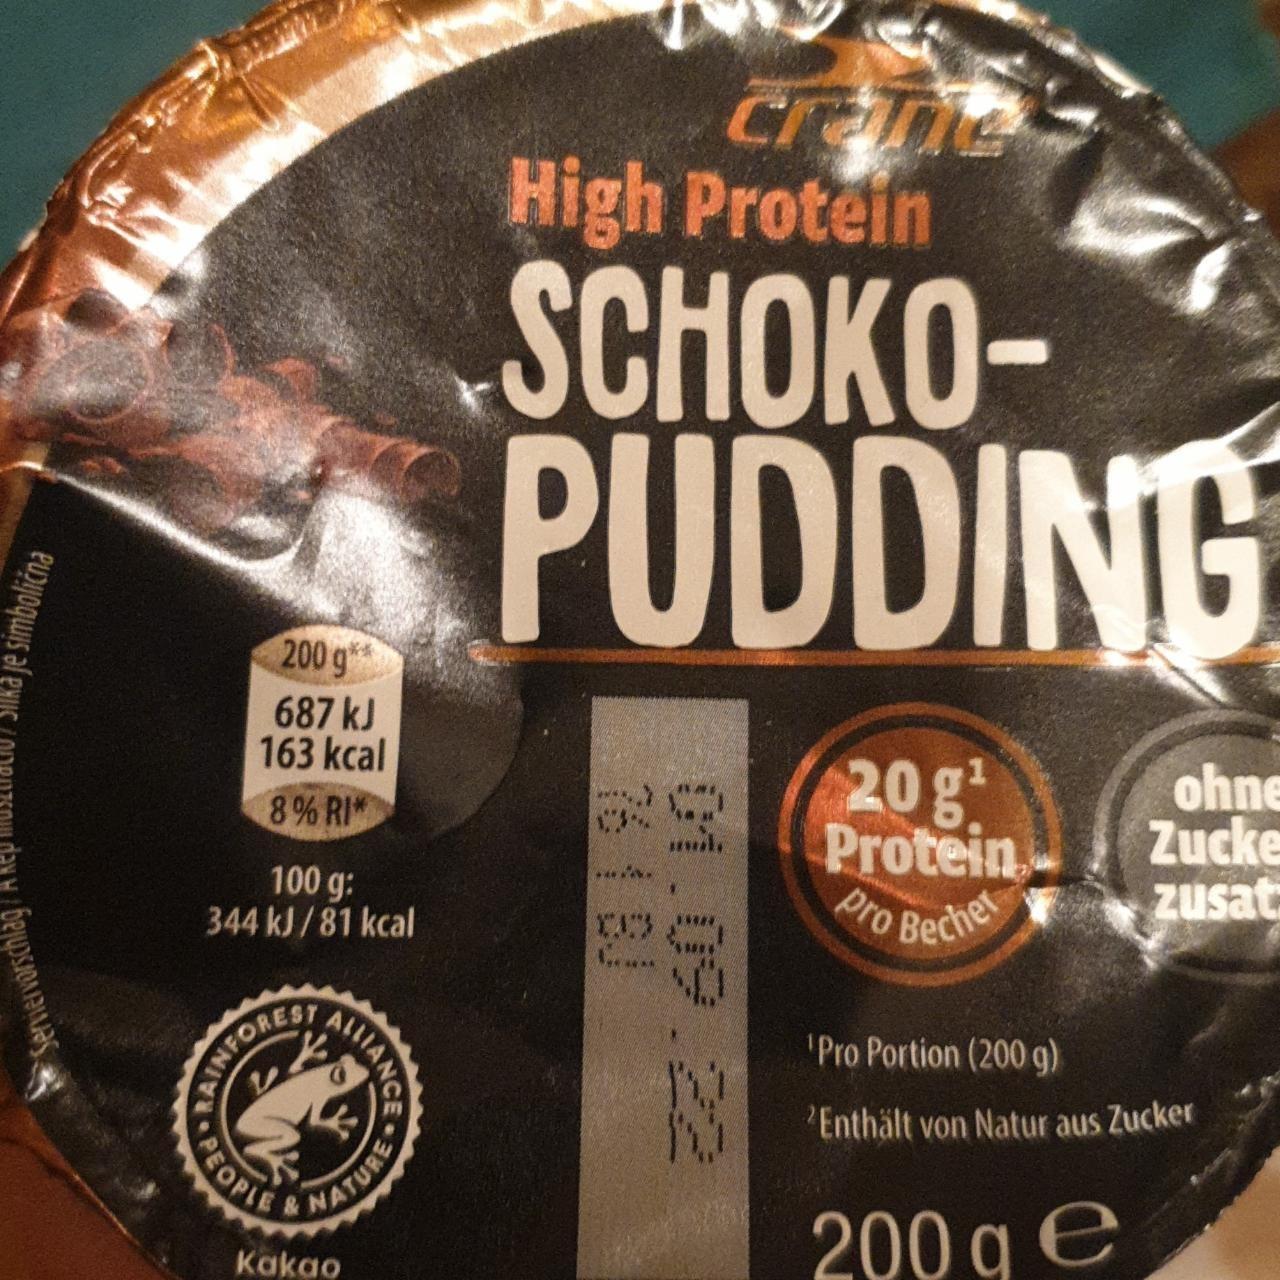 Képek - High protein pudding Schoko Crane